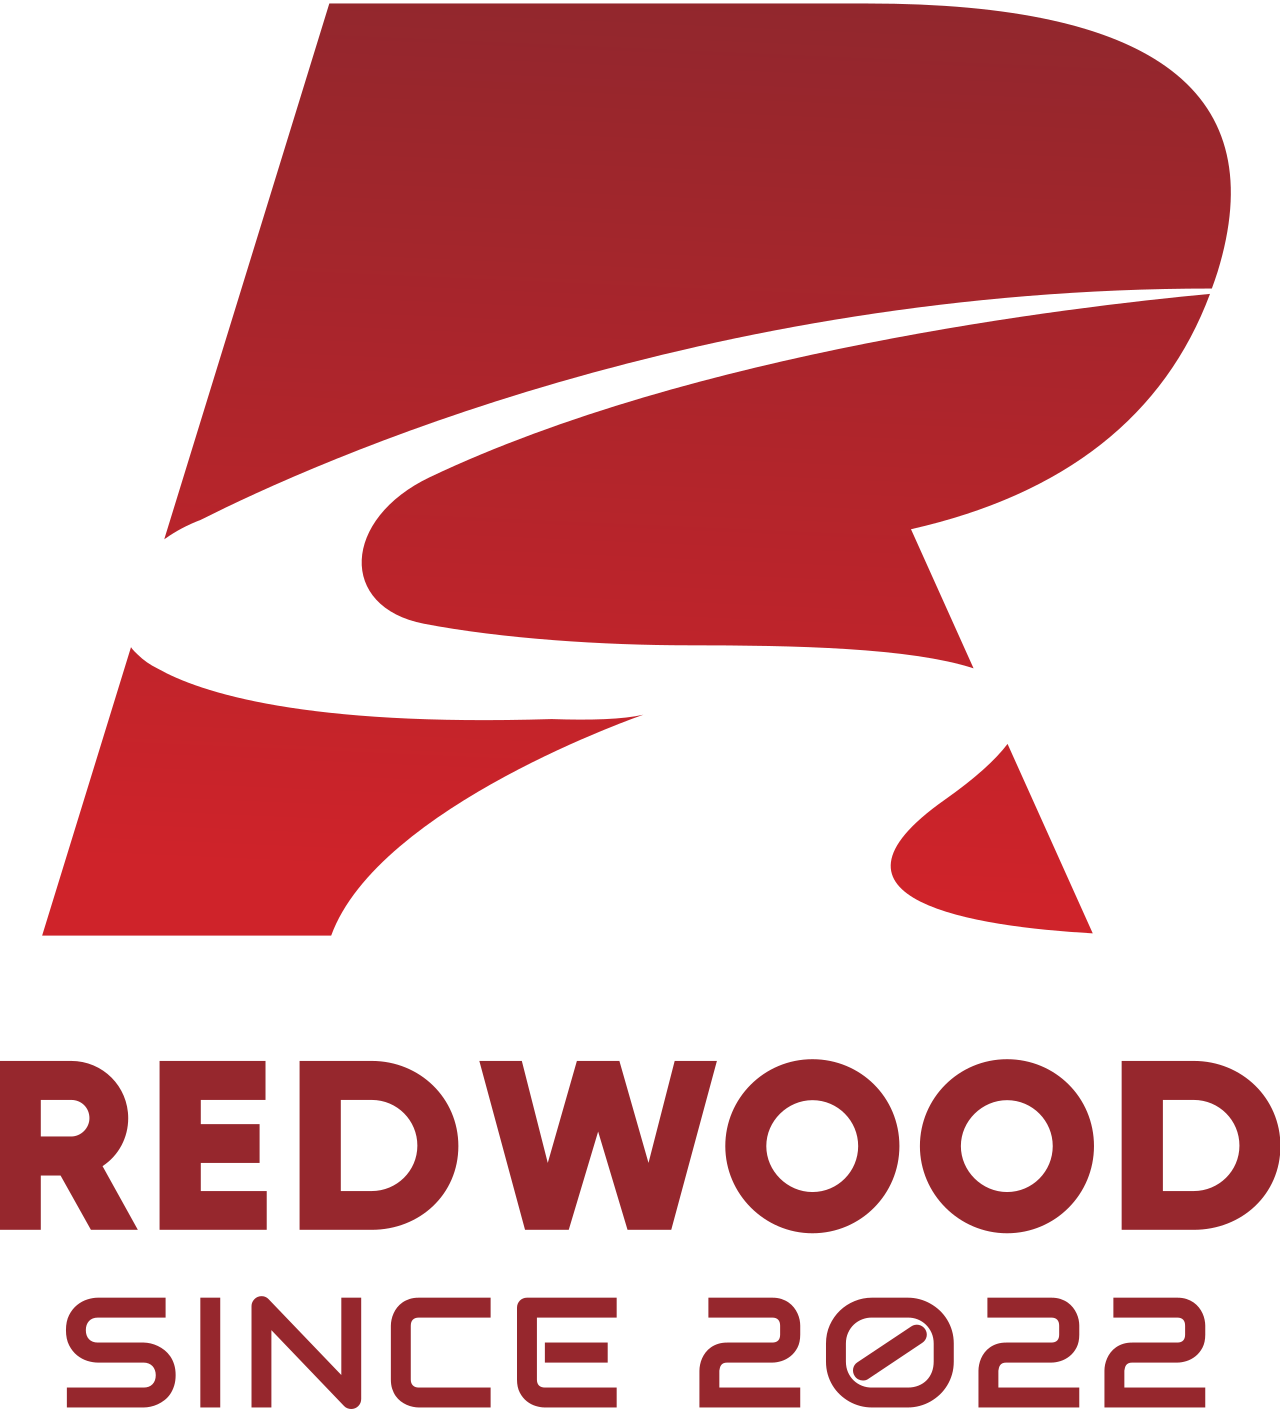 redwood's web page